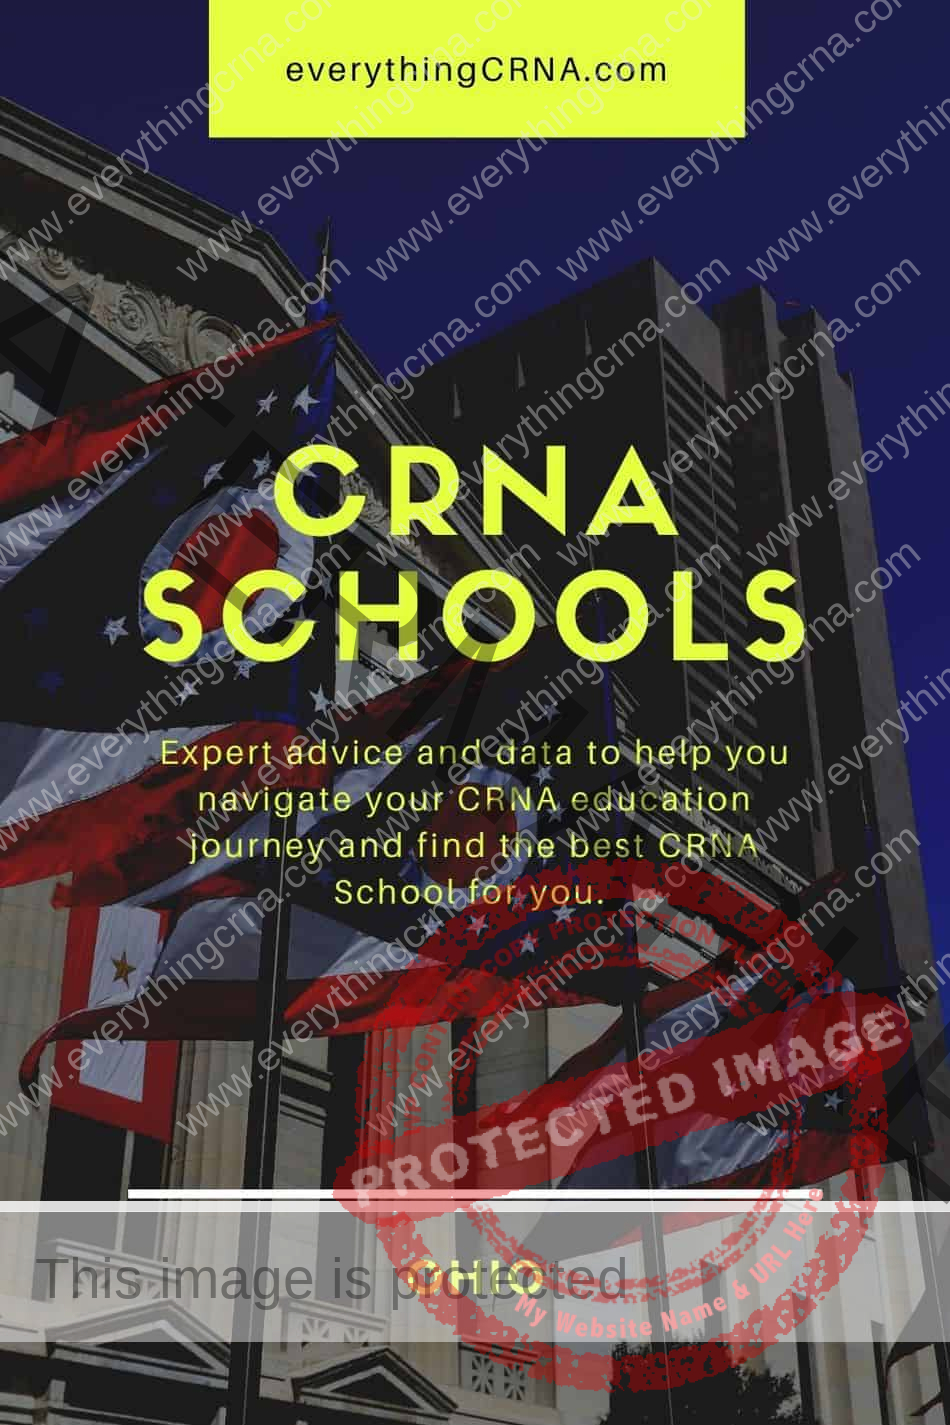 CRNA Schools in Ohio